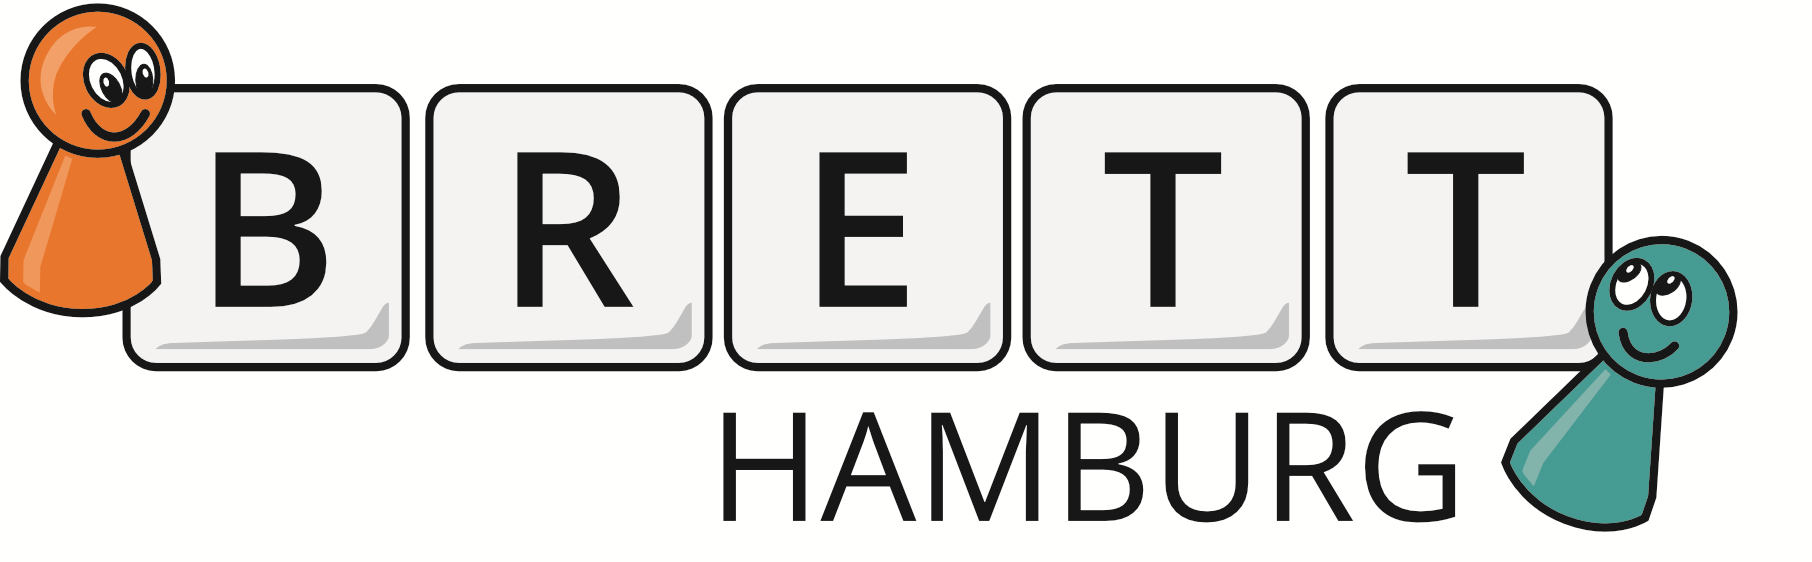 BRETT Hamburg